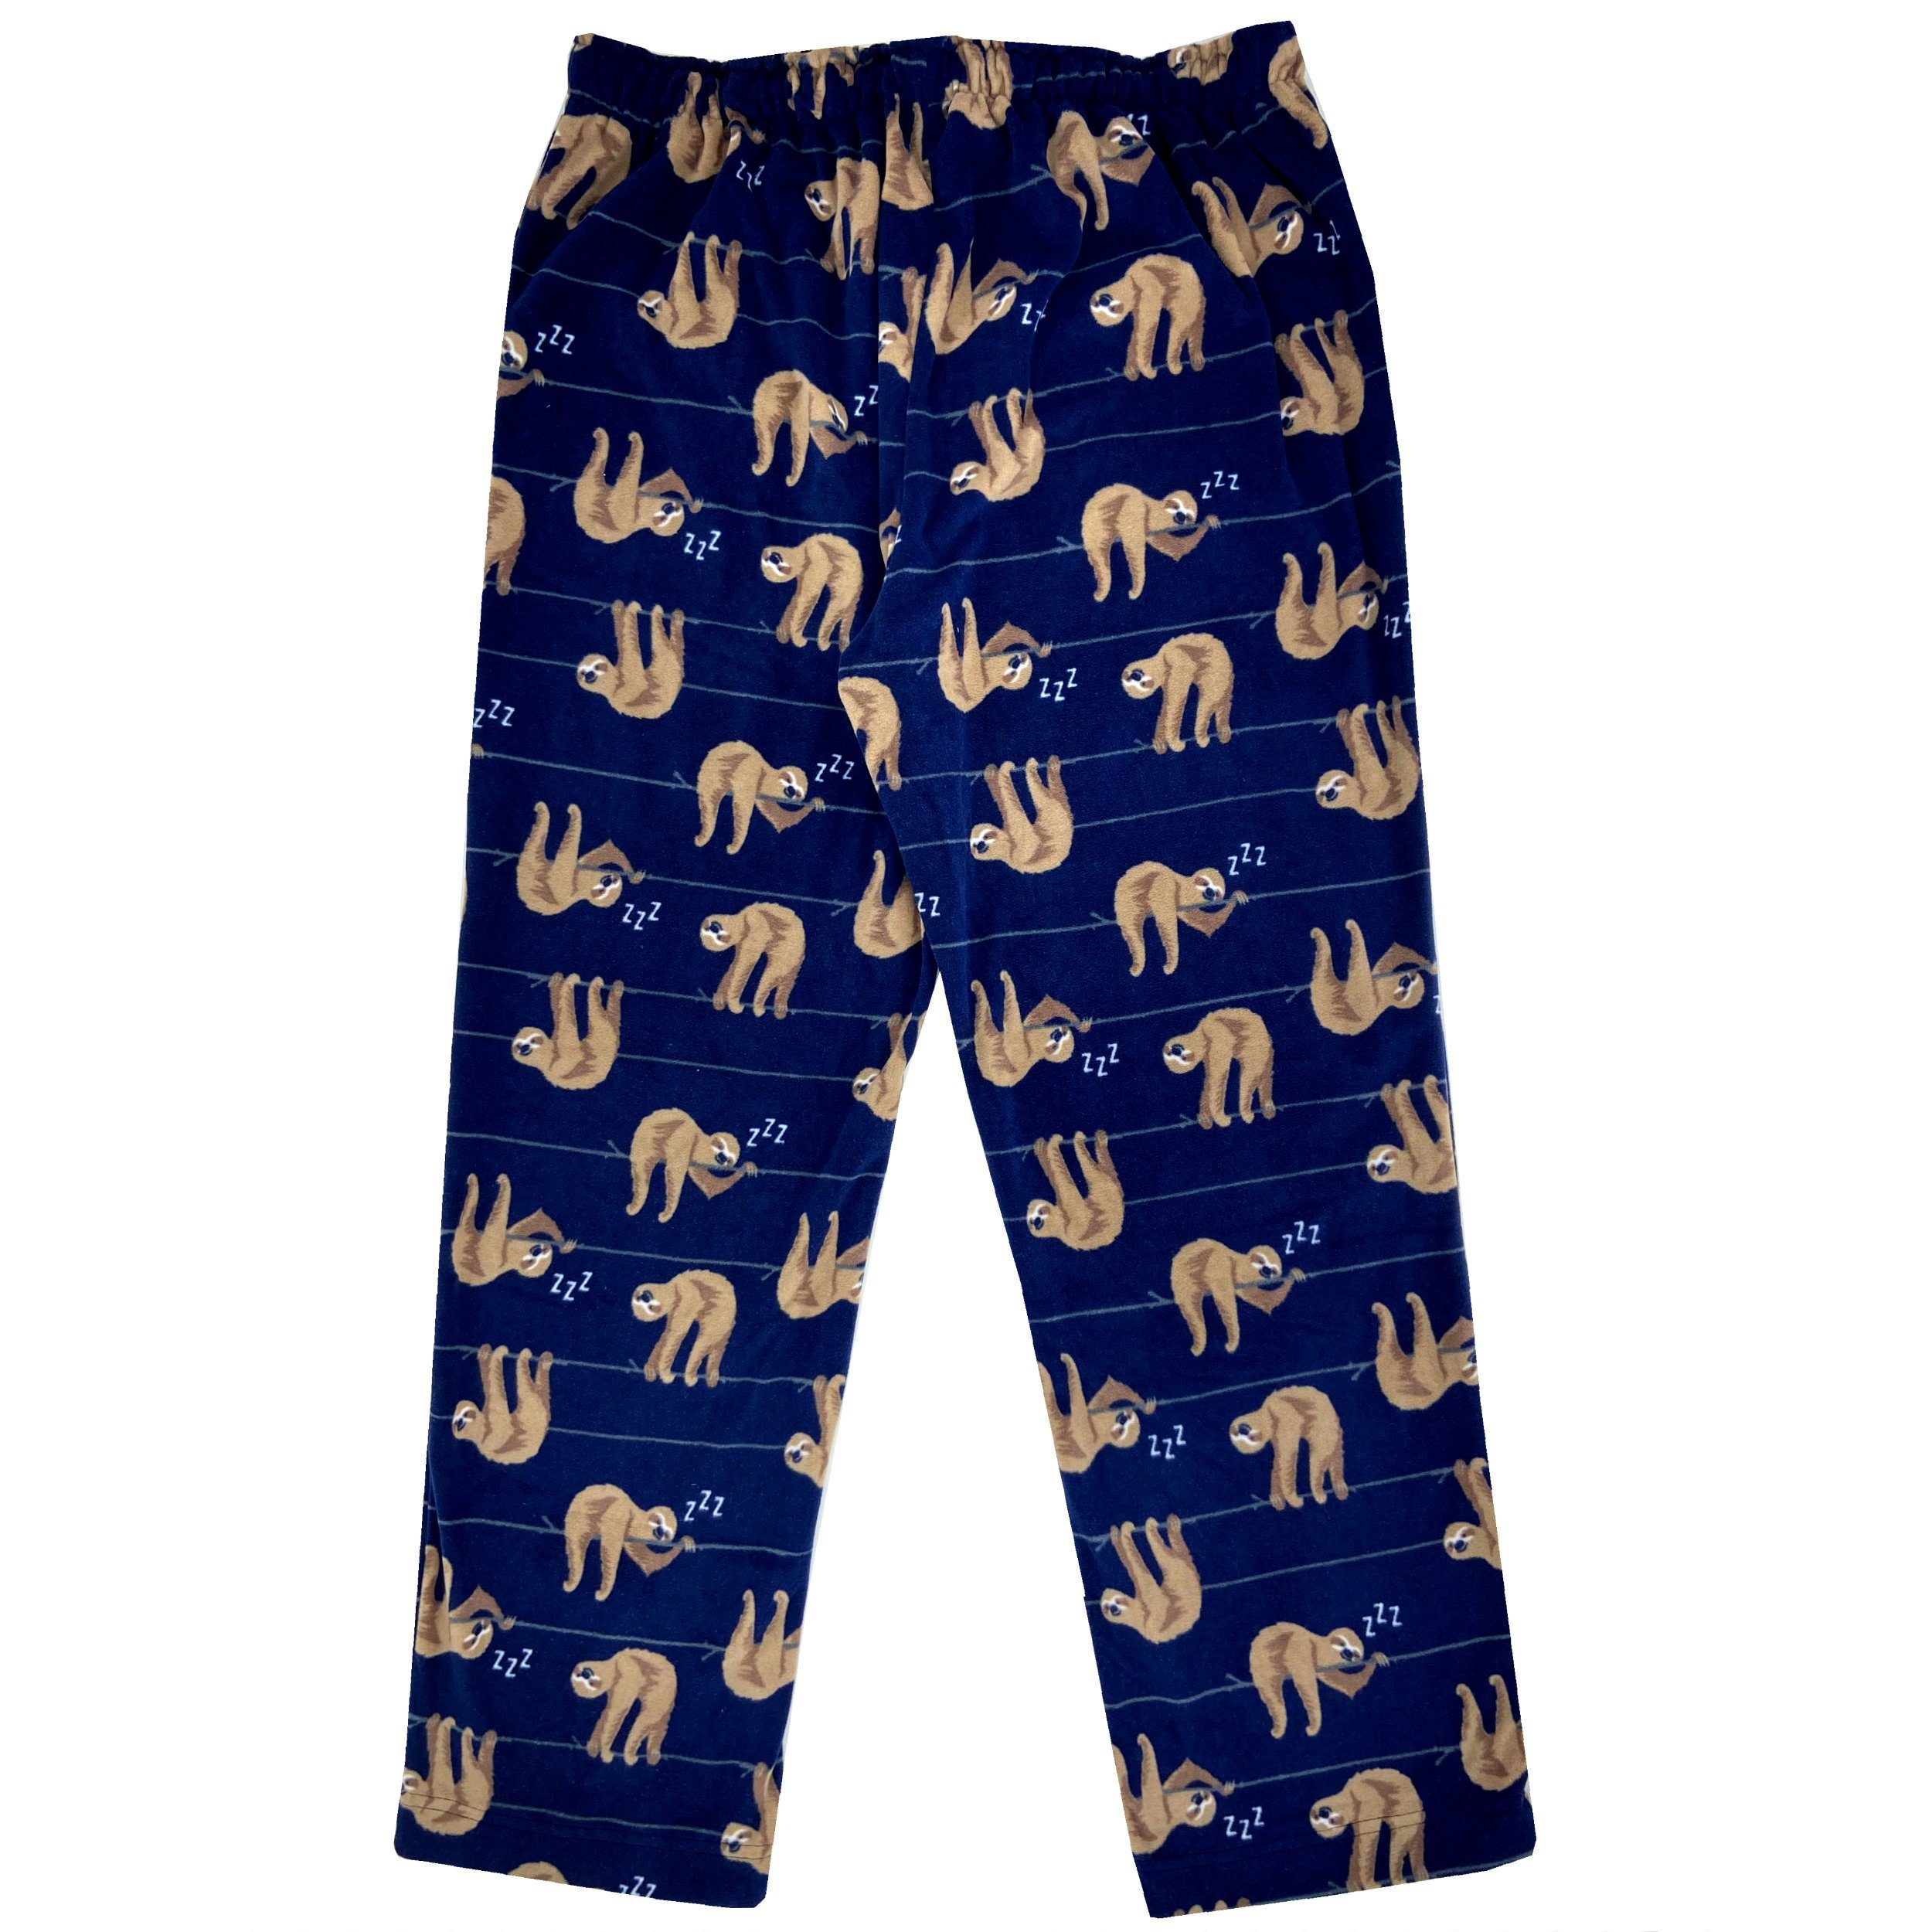 Men's Winter Essential Drawstring Fleece Pyjama Pants Bottoms with Sloth All-Over-Print